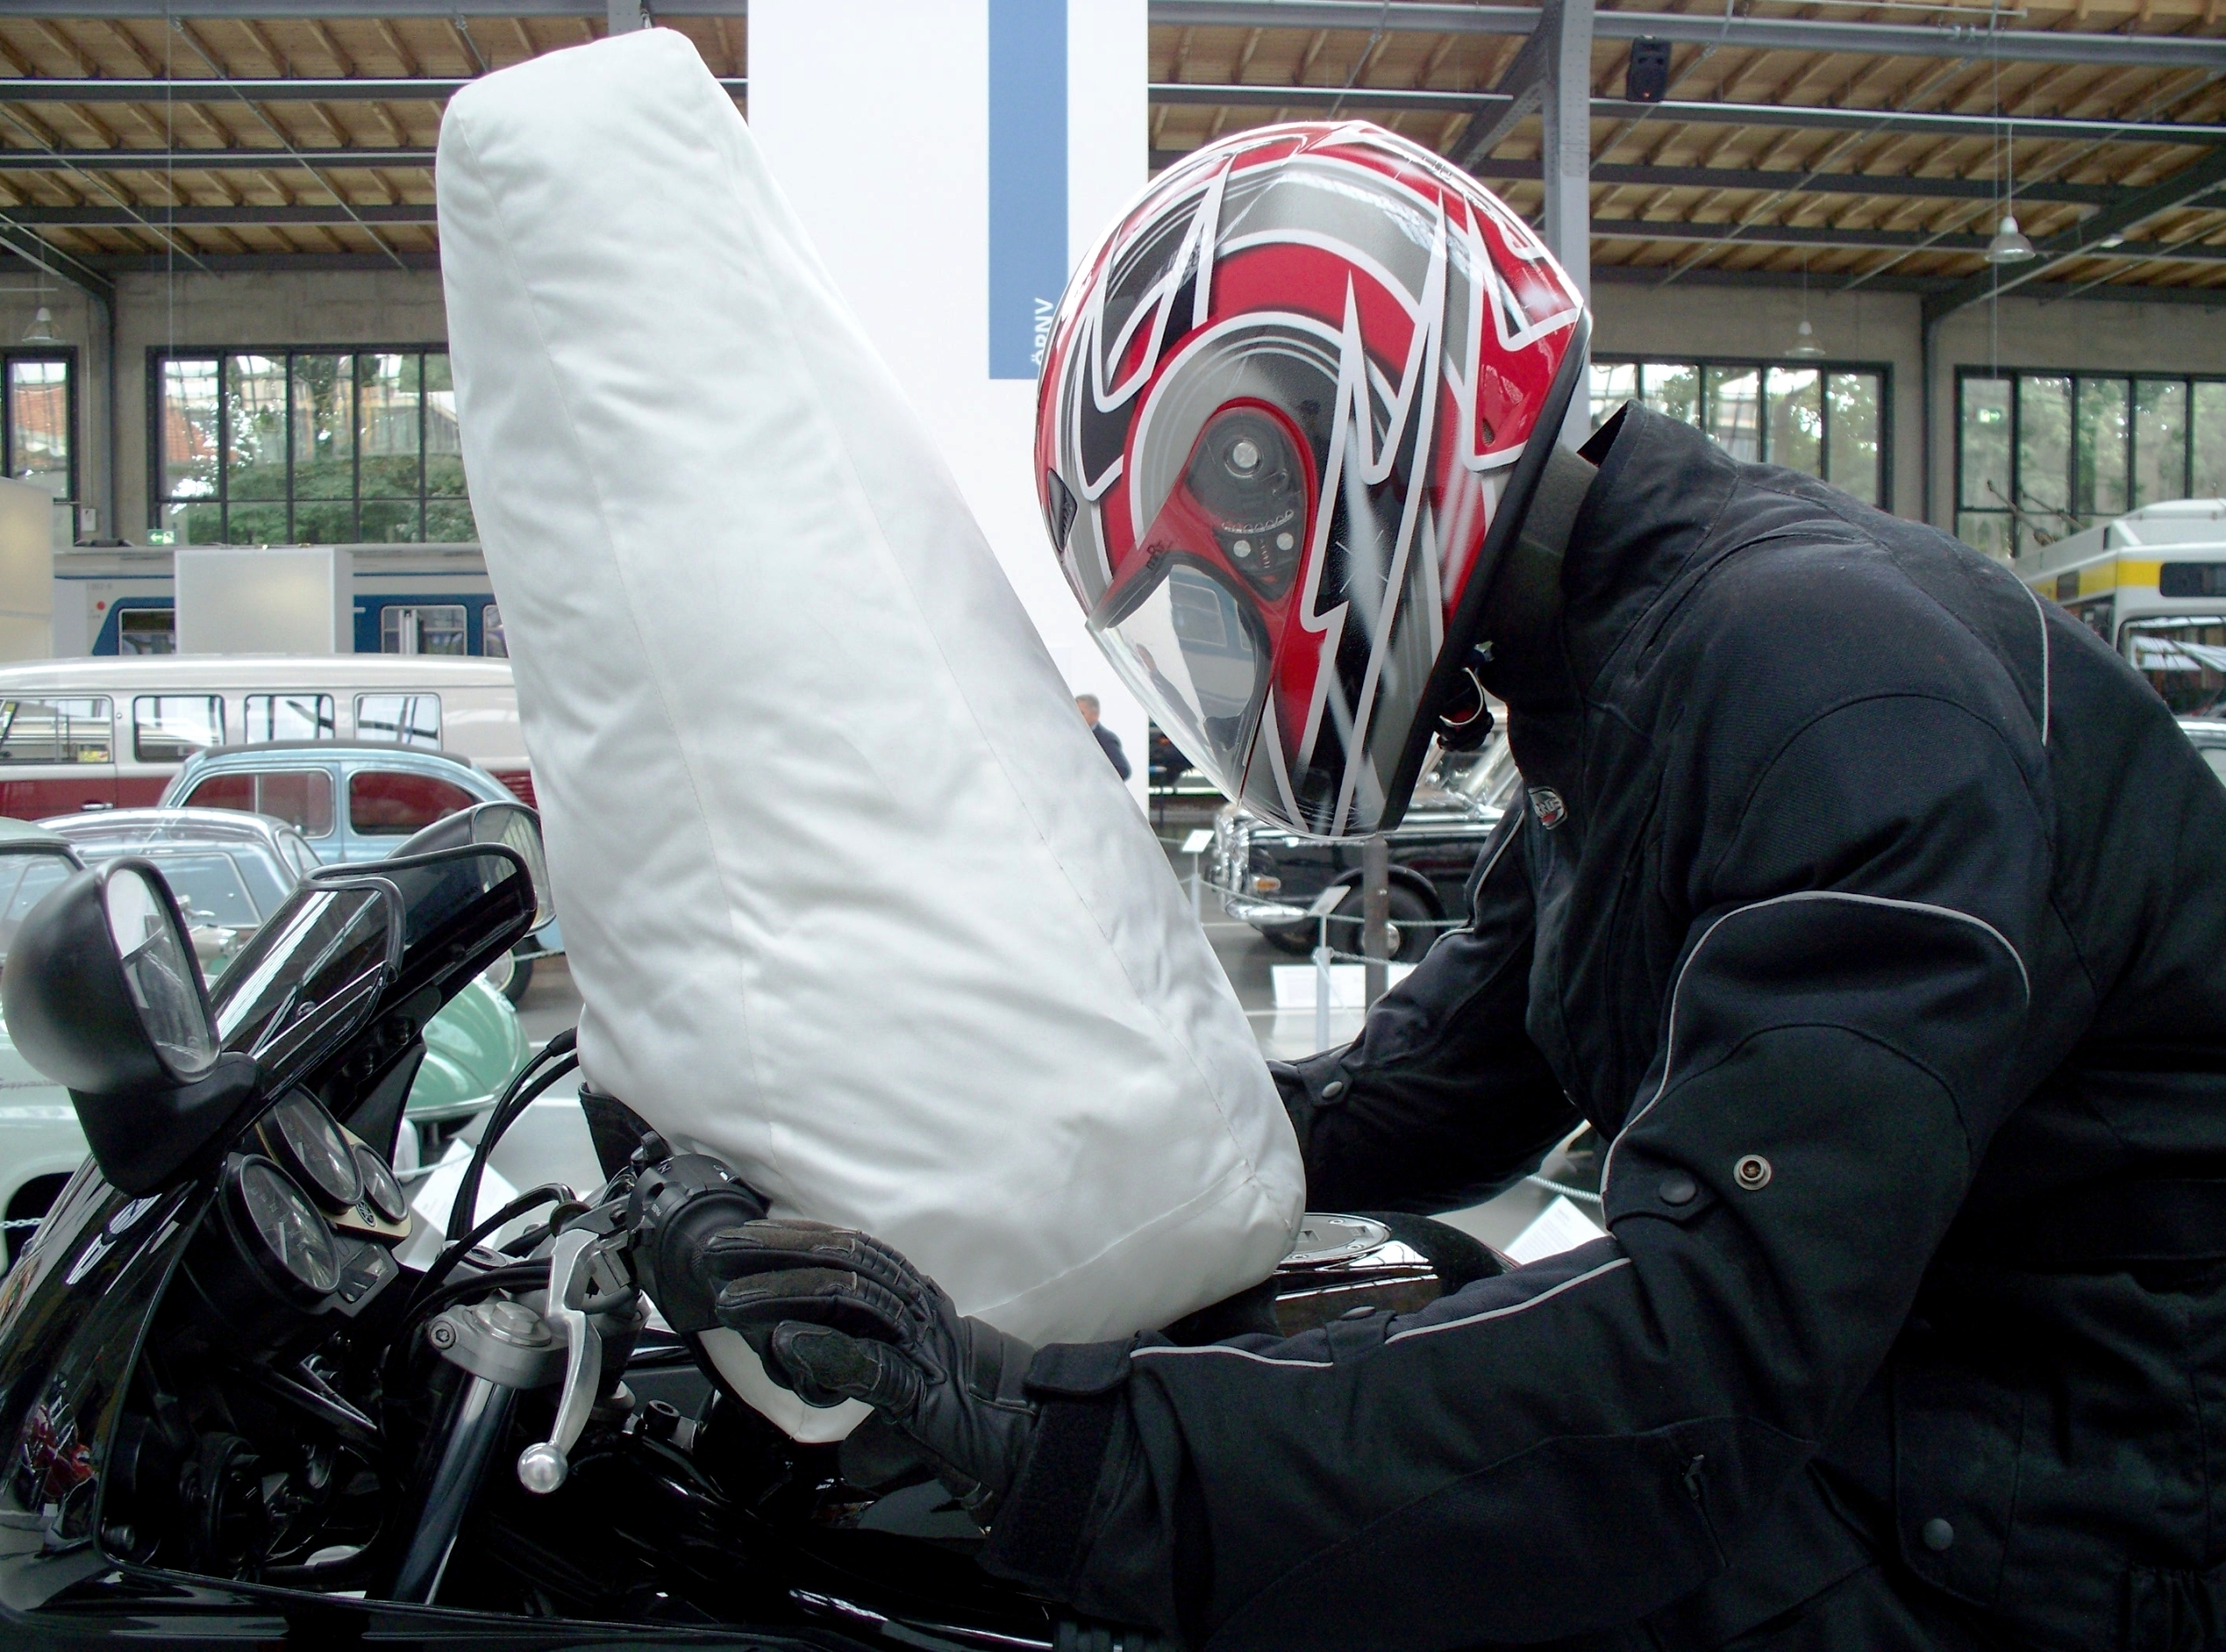 Motorcycle Airbag Market